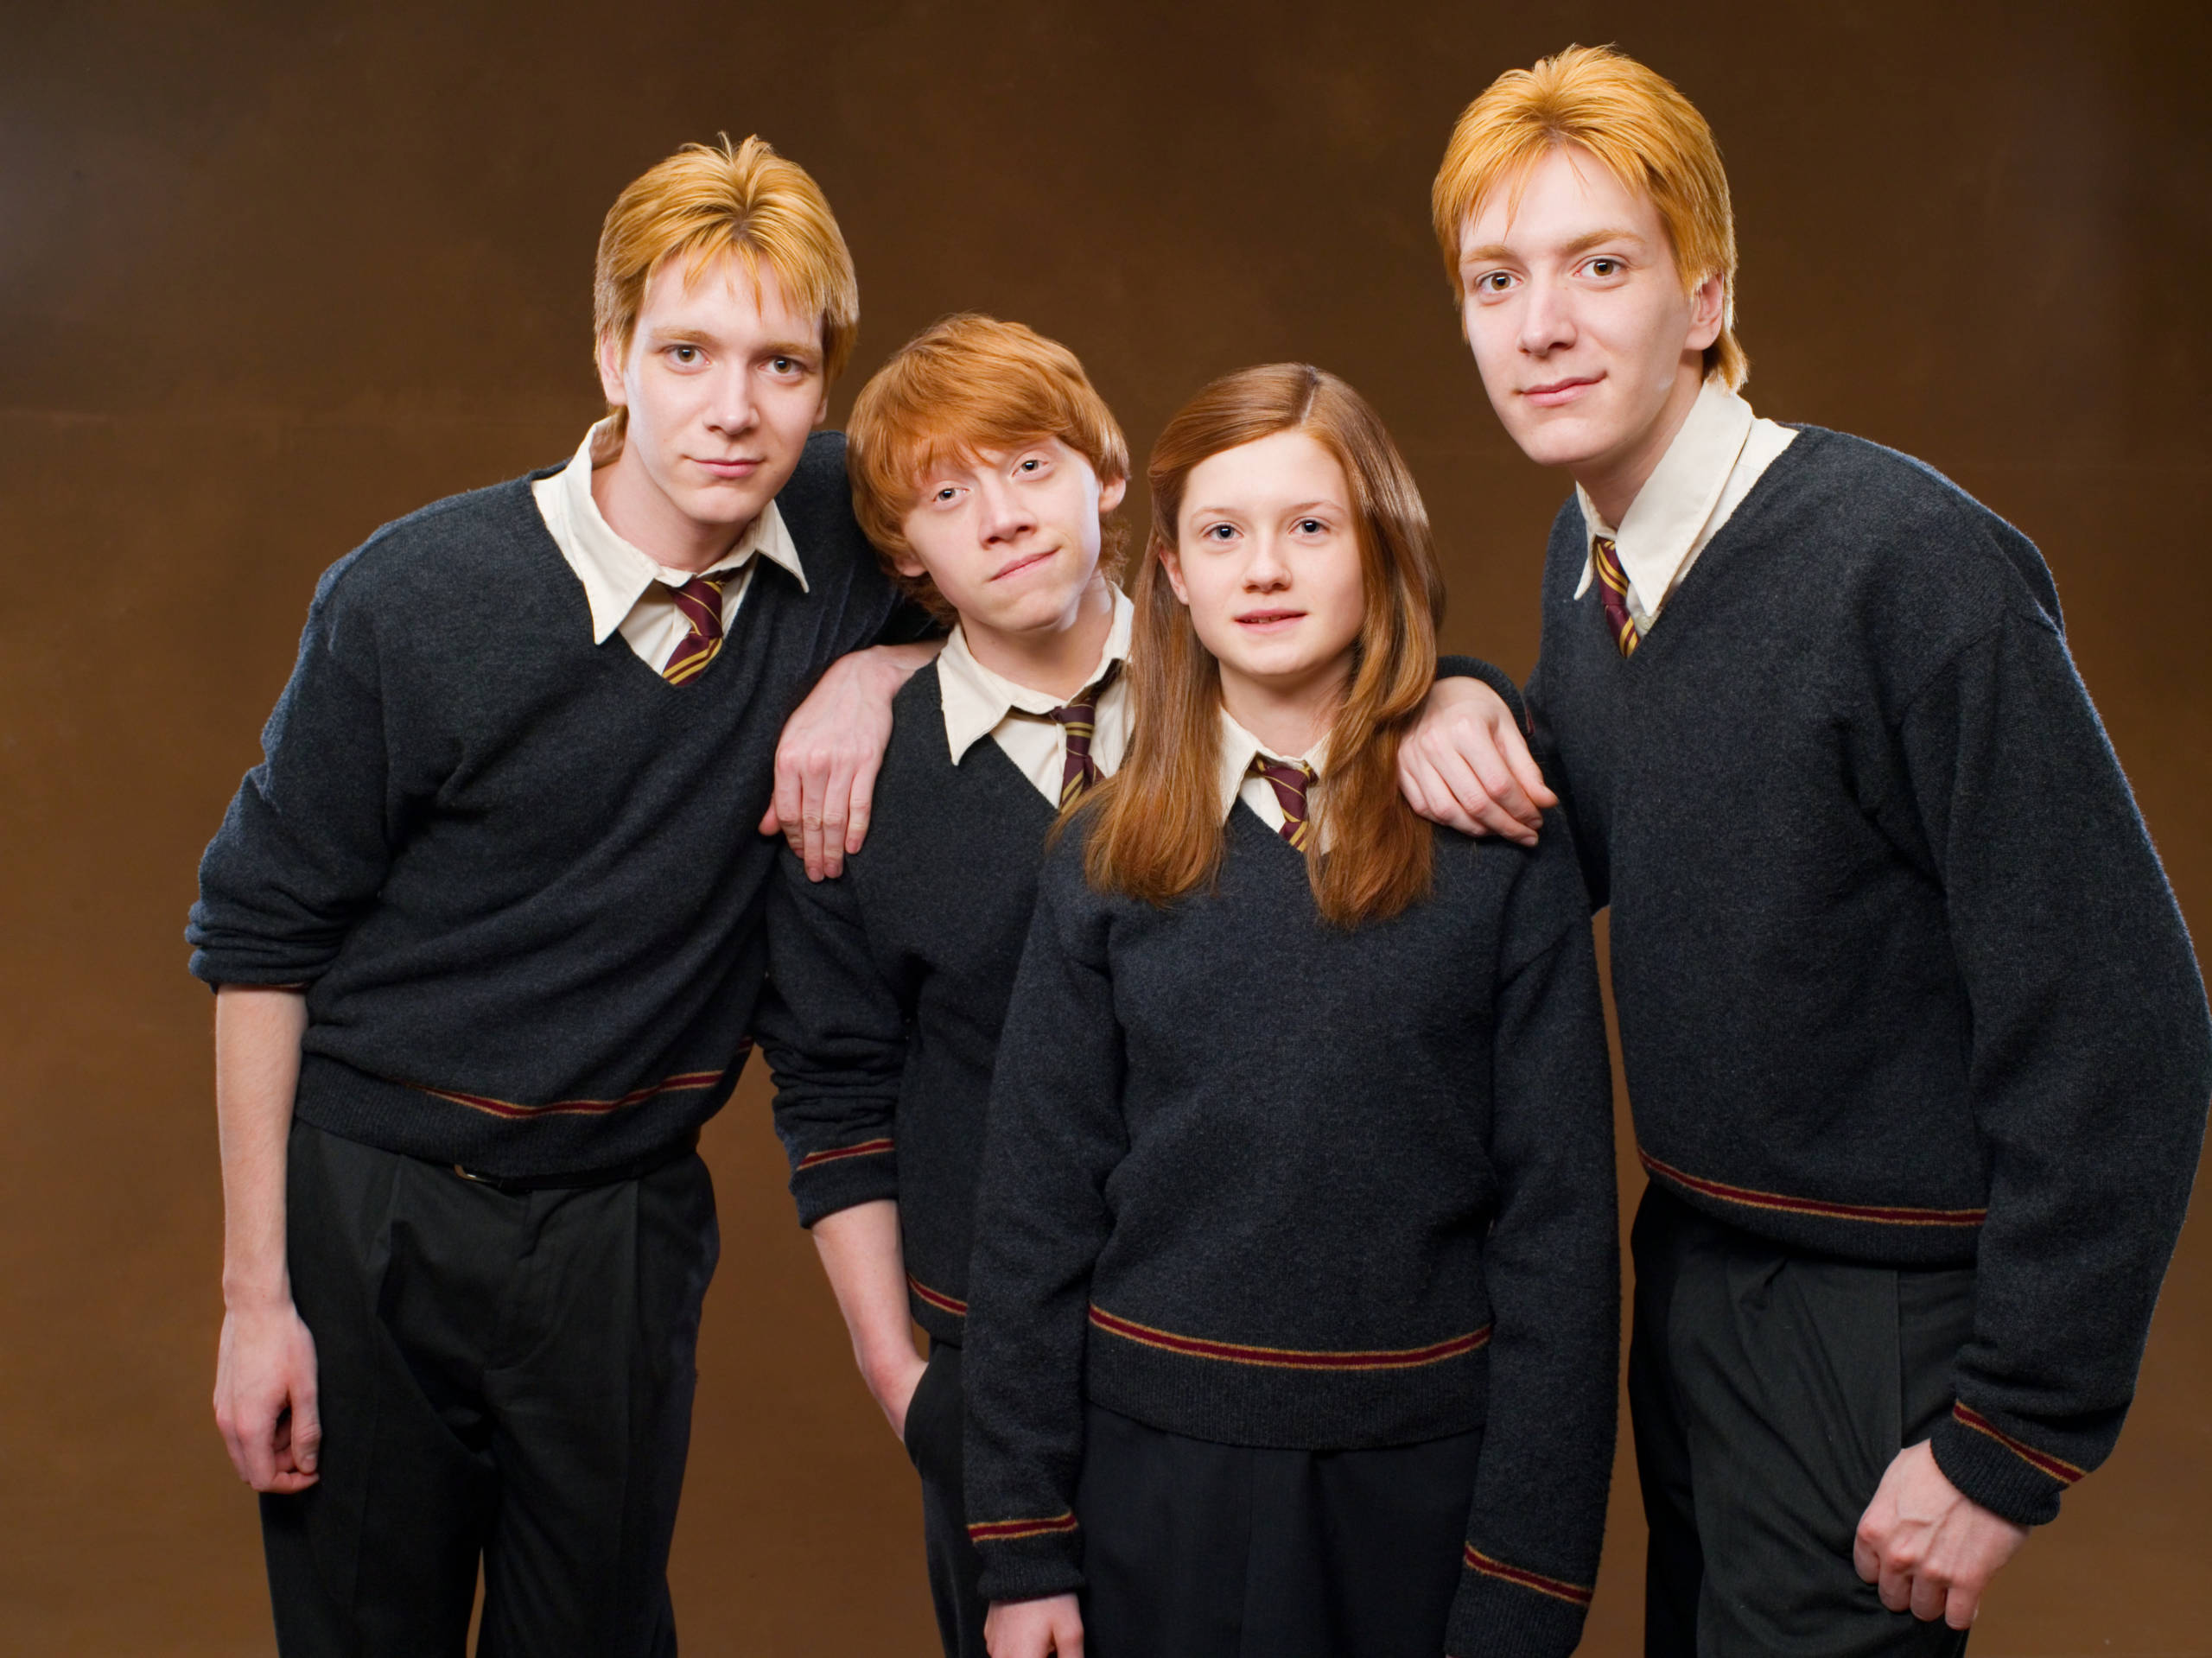 The Weasley's in school uniform 